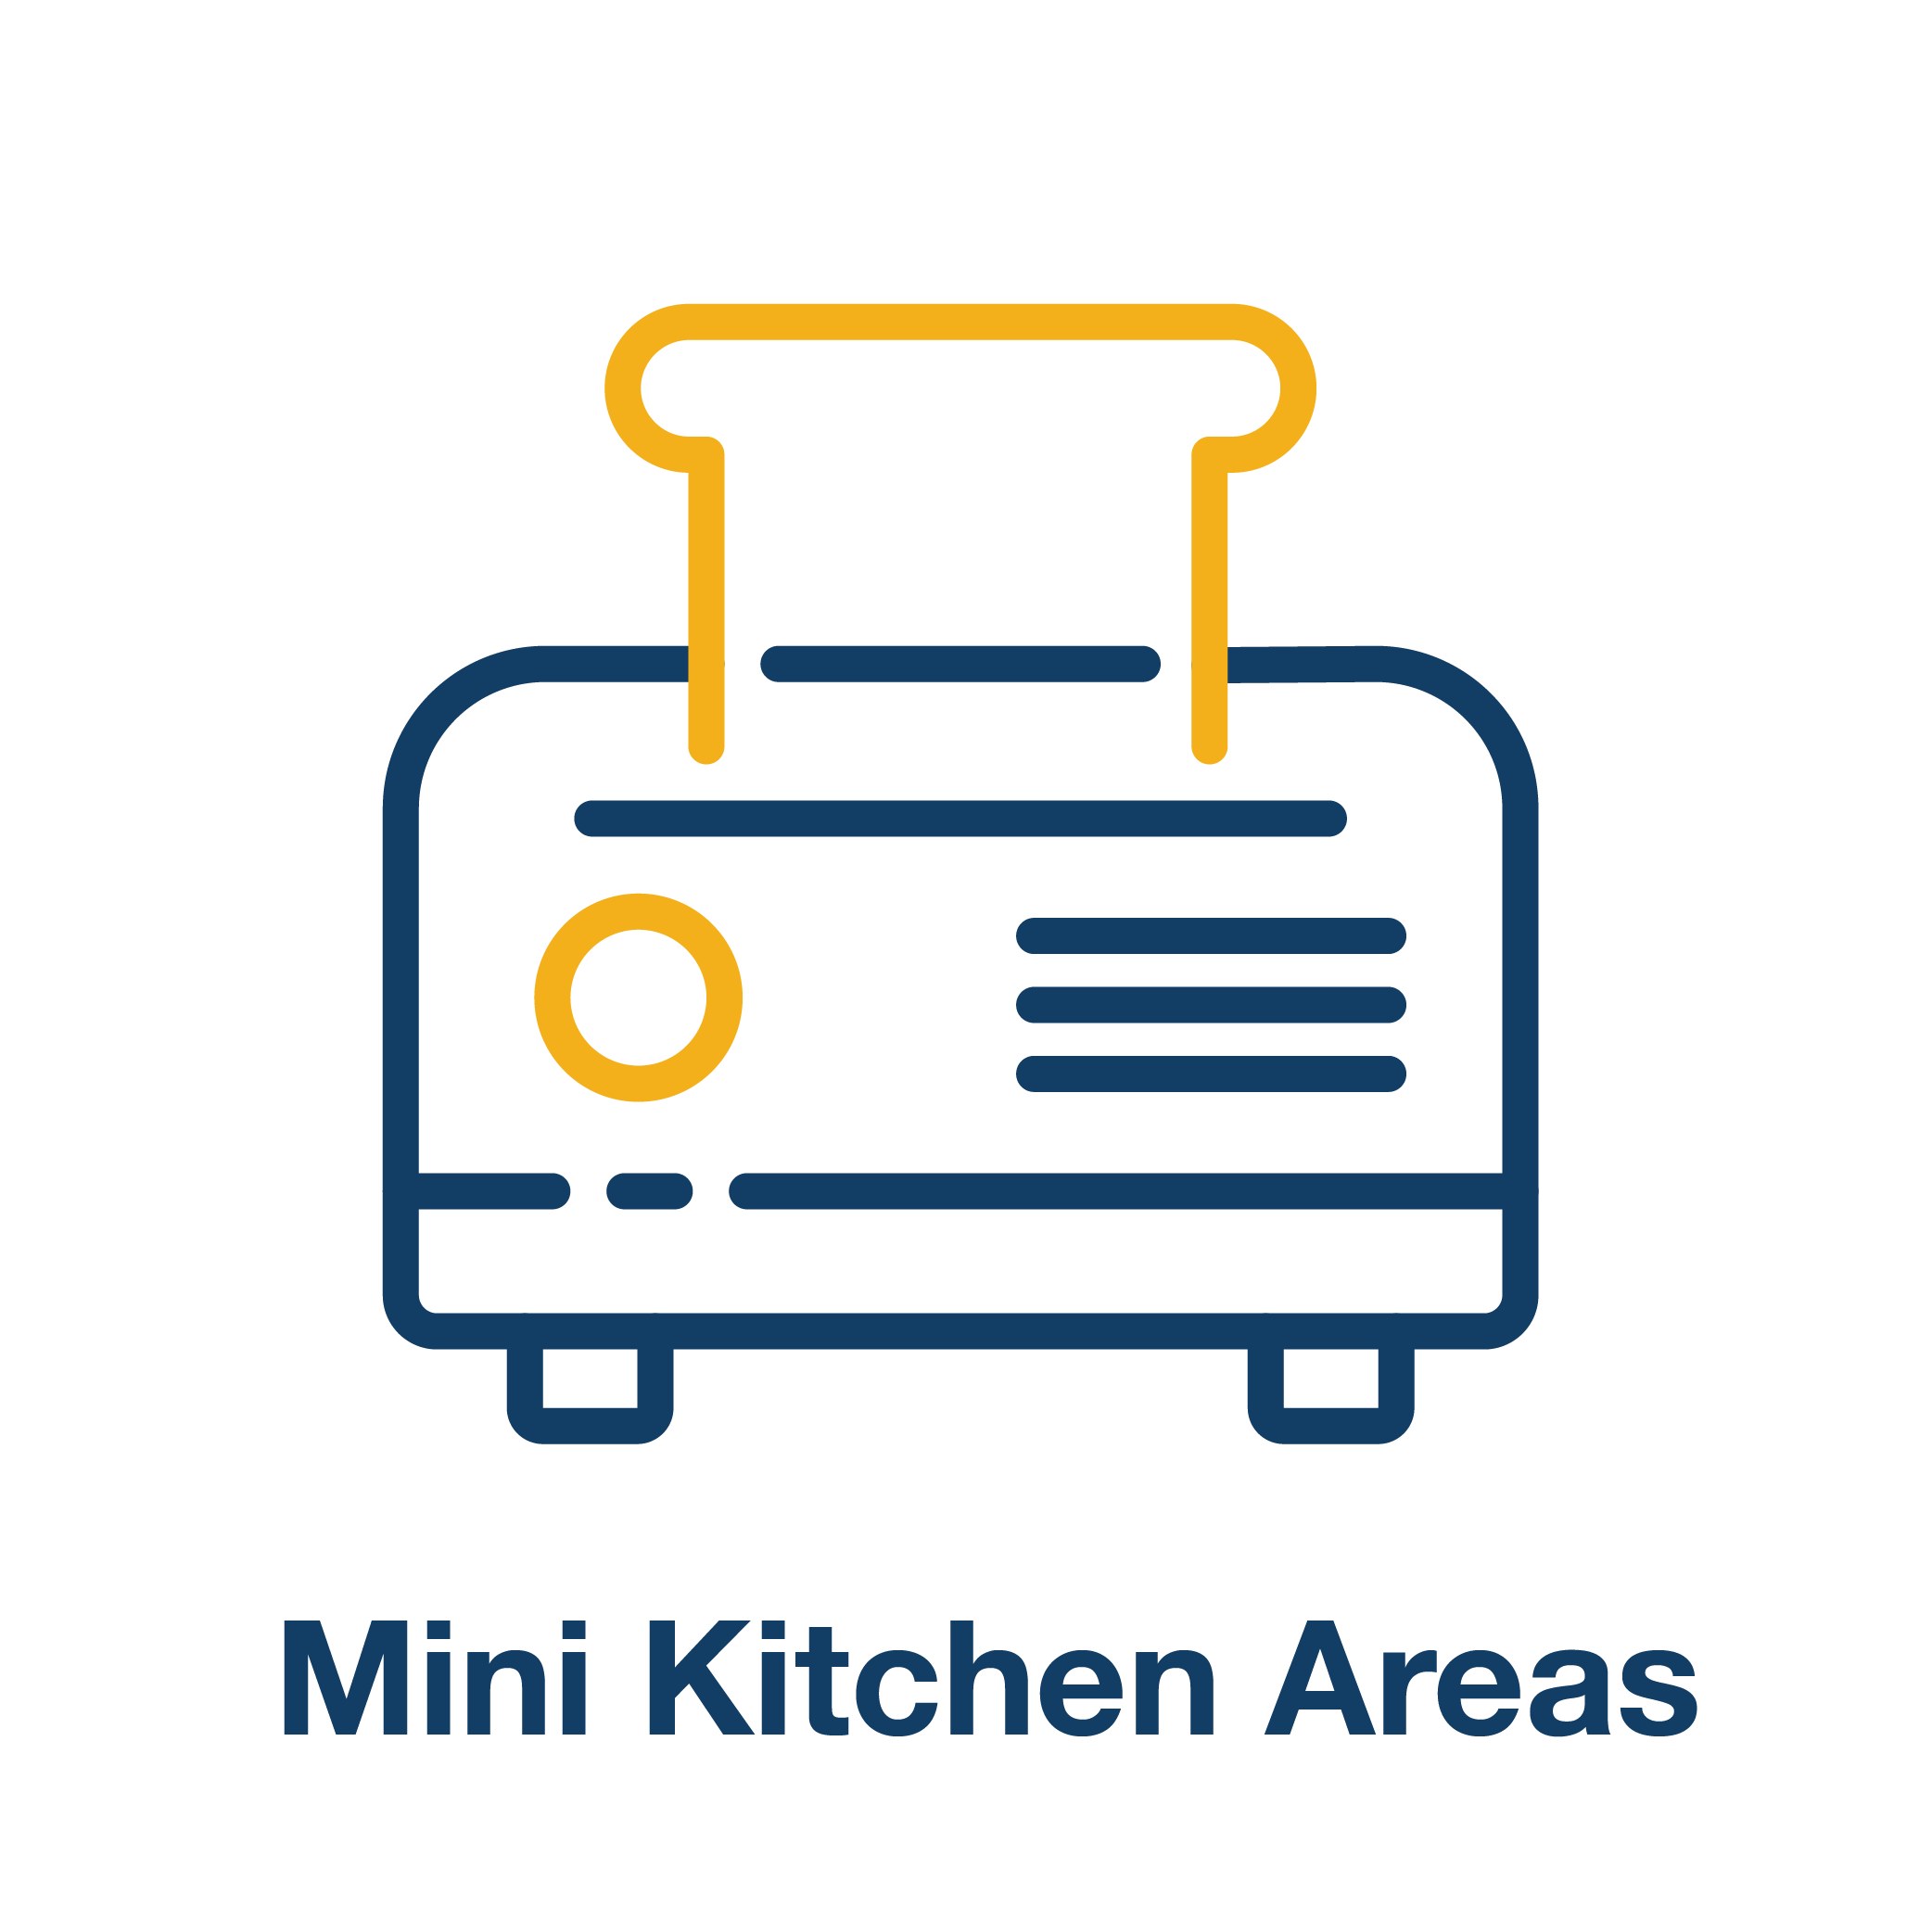 Mini Kitchen Areas